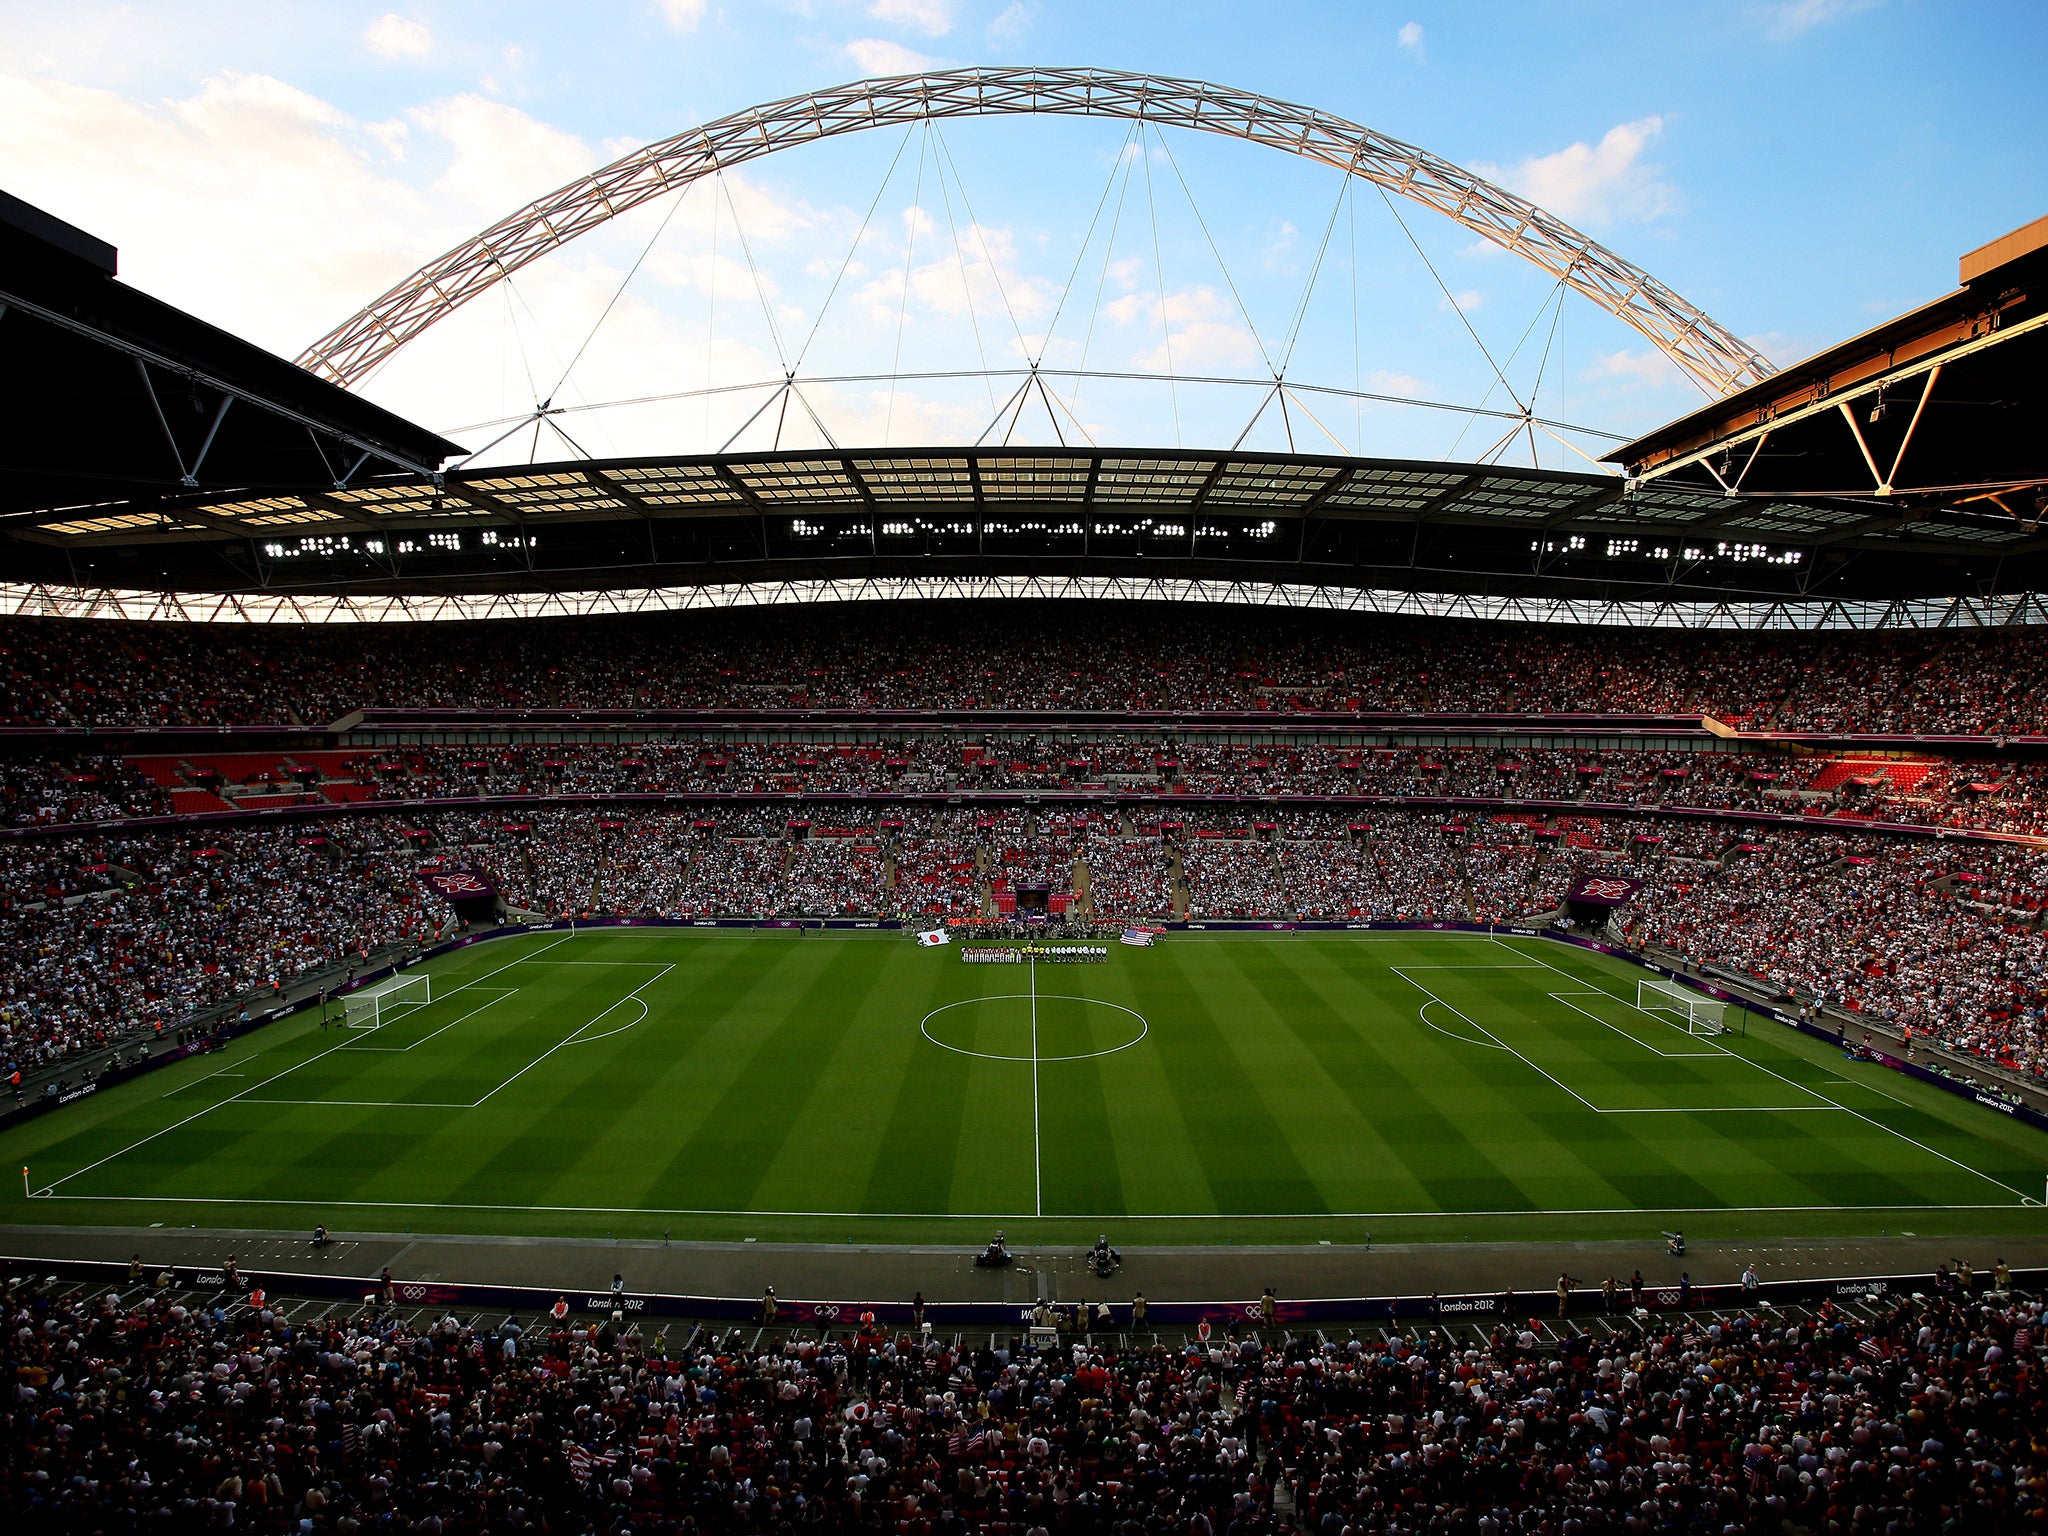 Tottenham will play their Champions League matches at Wembley Stadium next season